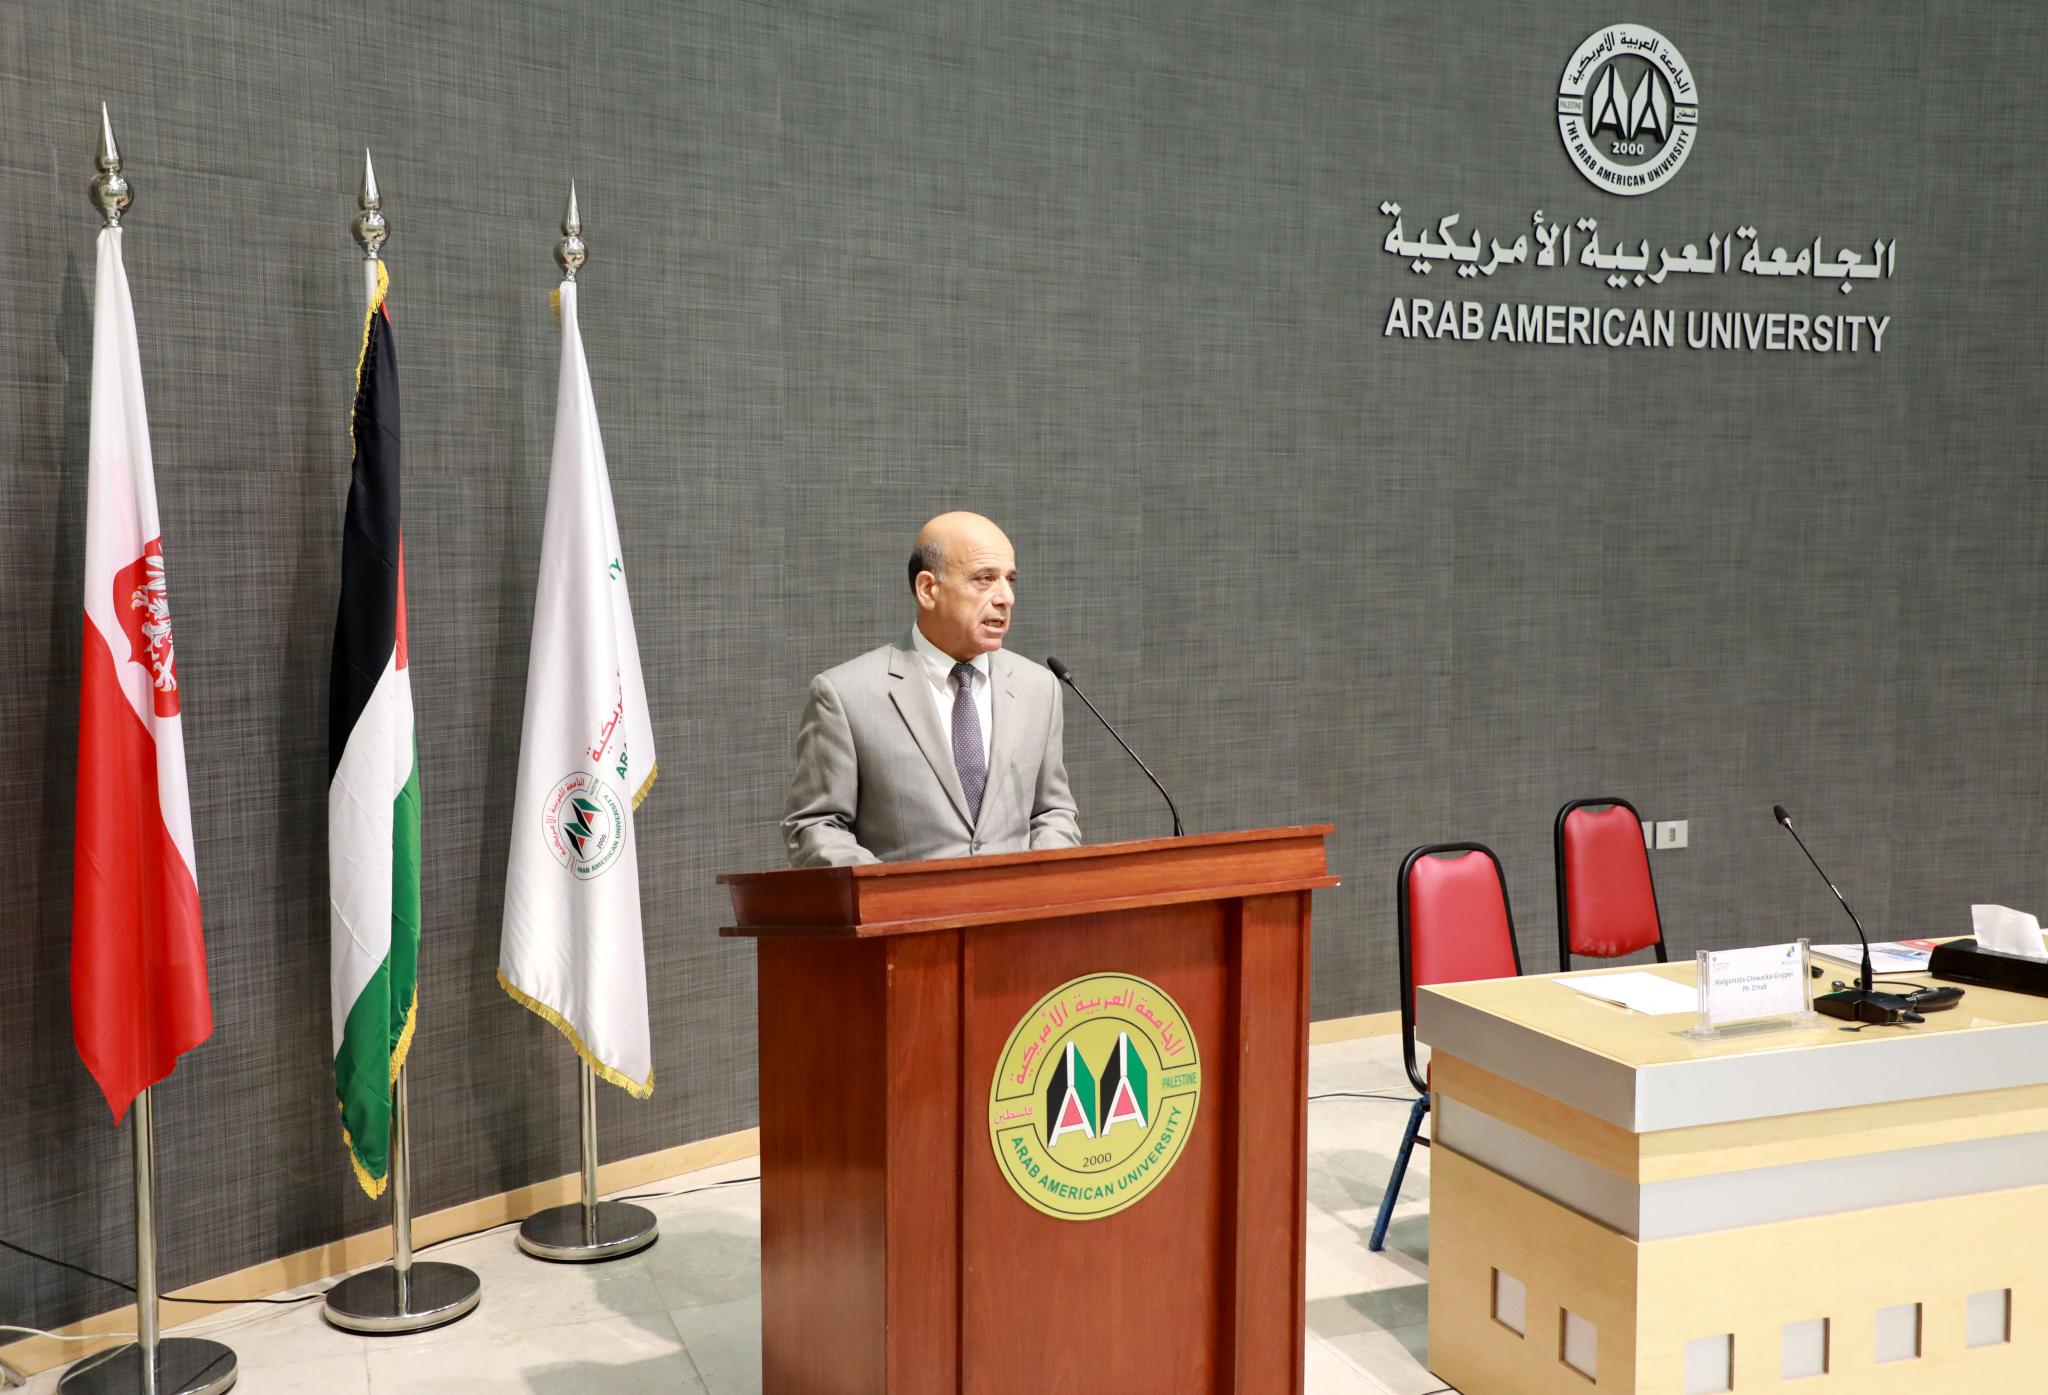 Vice President for Academic Affairs, Dr. Zaki Saleh